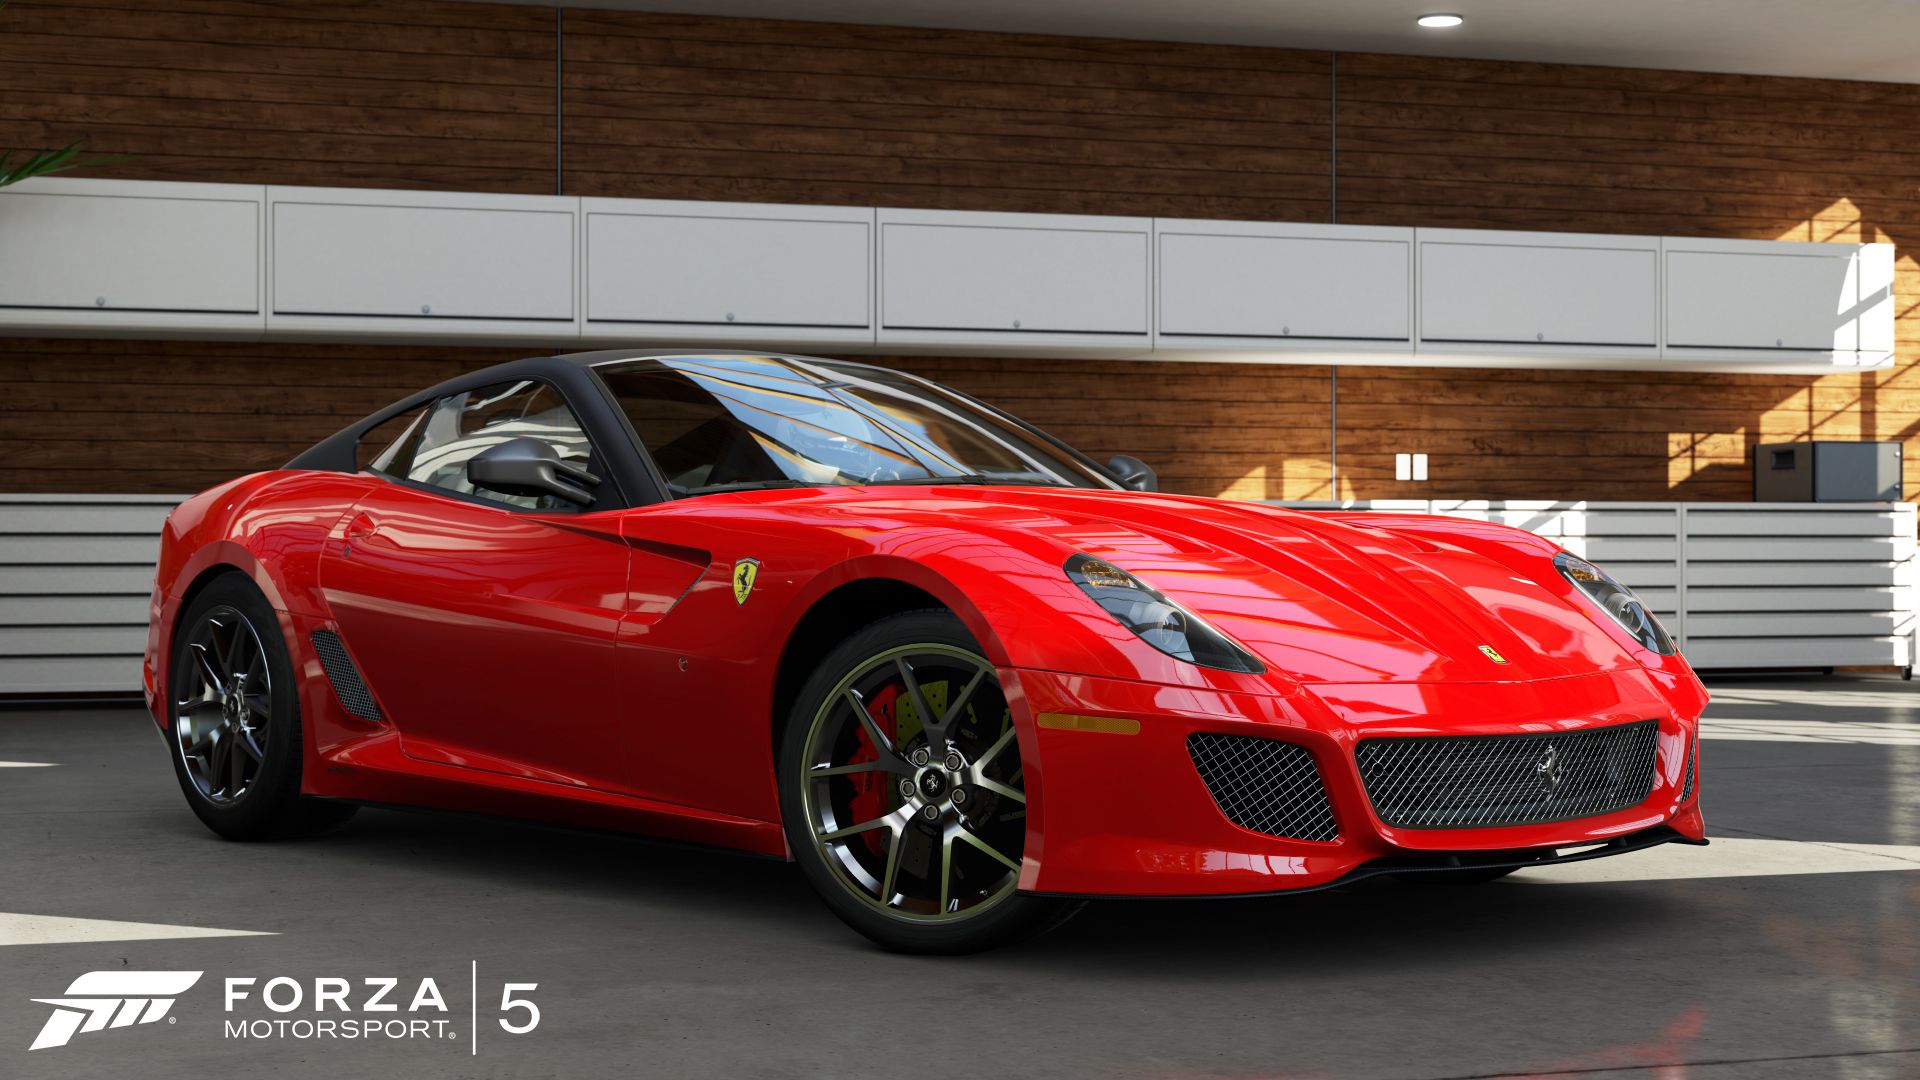 Forza-Motorsport-5-Gets-Gorgeous-Batch-of-Screenshots-394385-5.jpg